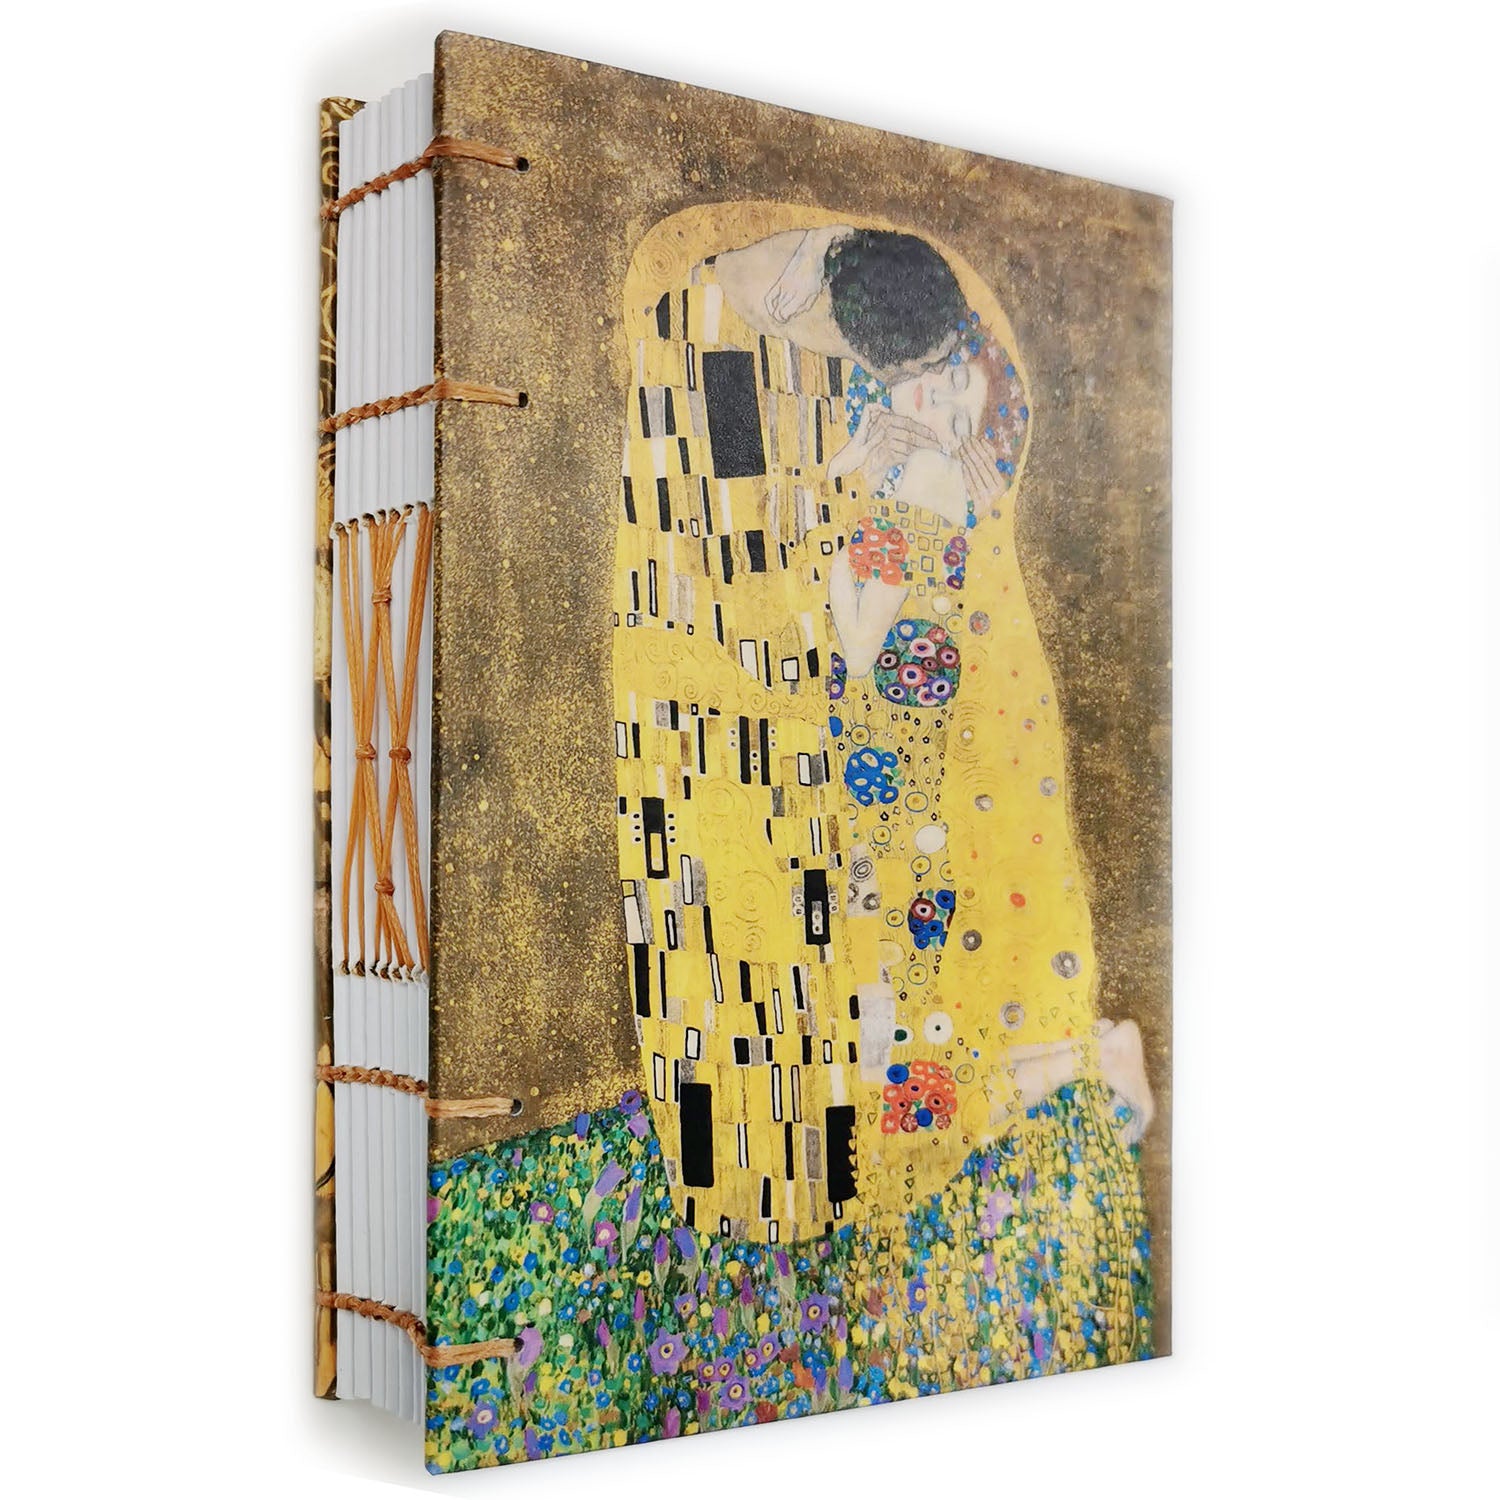 Handmade Notebook with Byzantine Binding - Alhambra